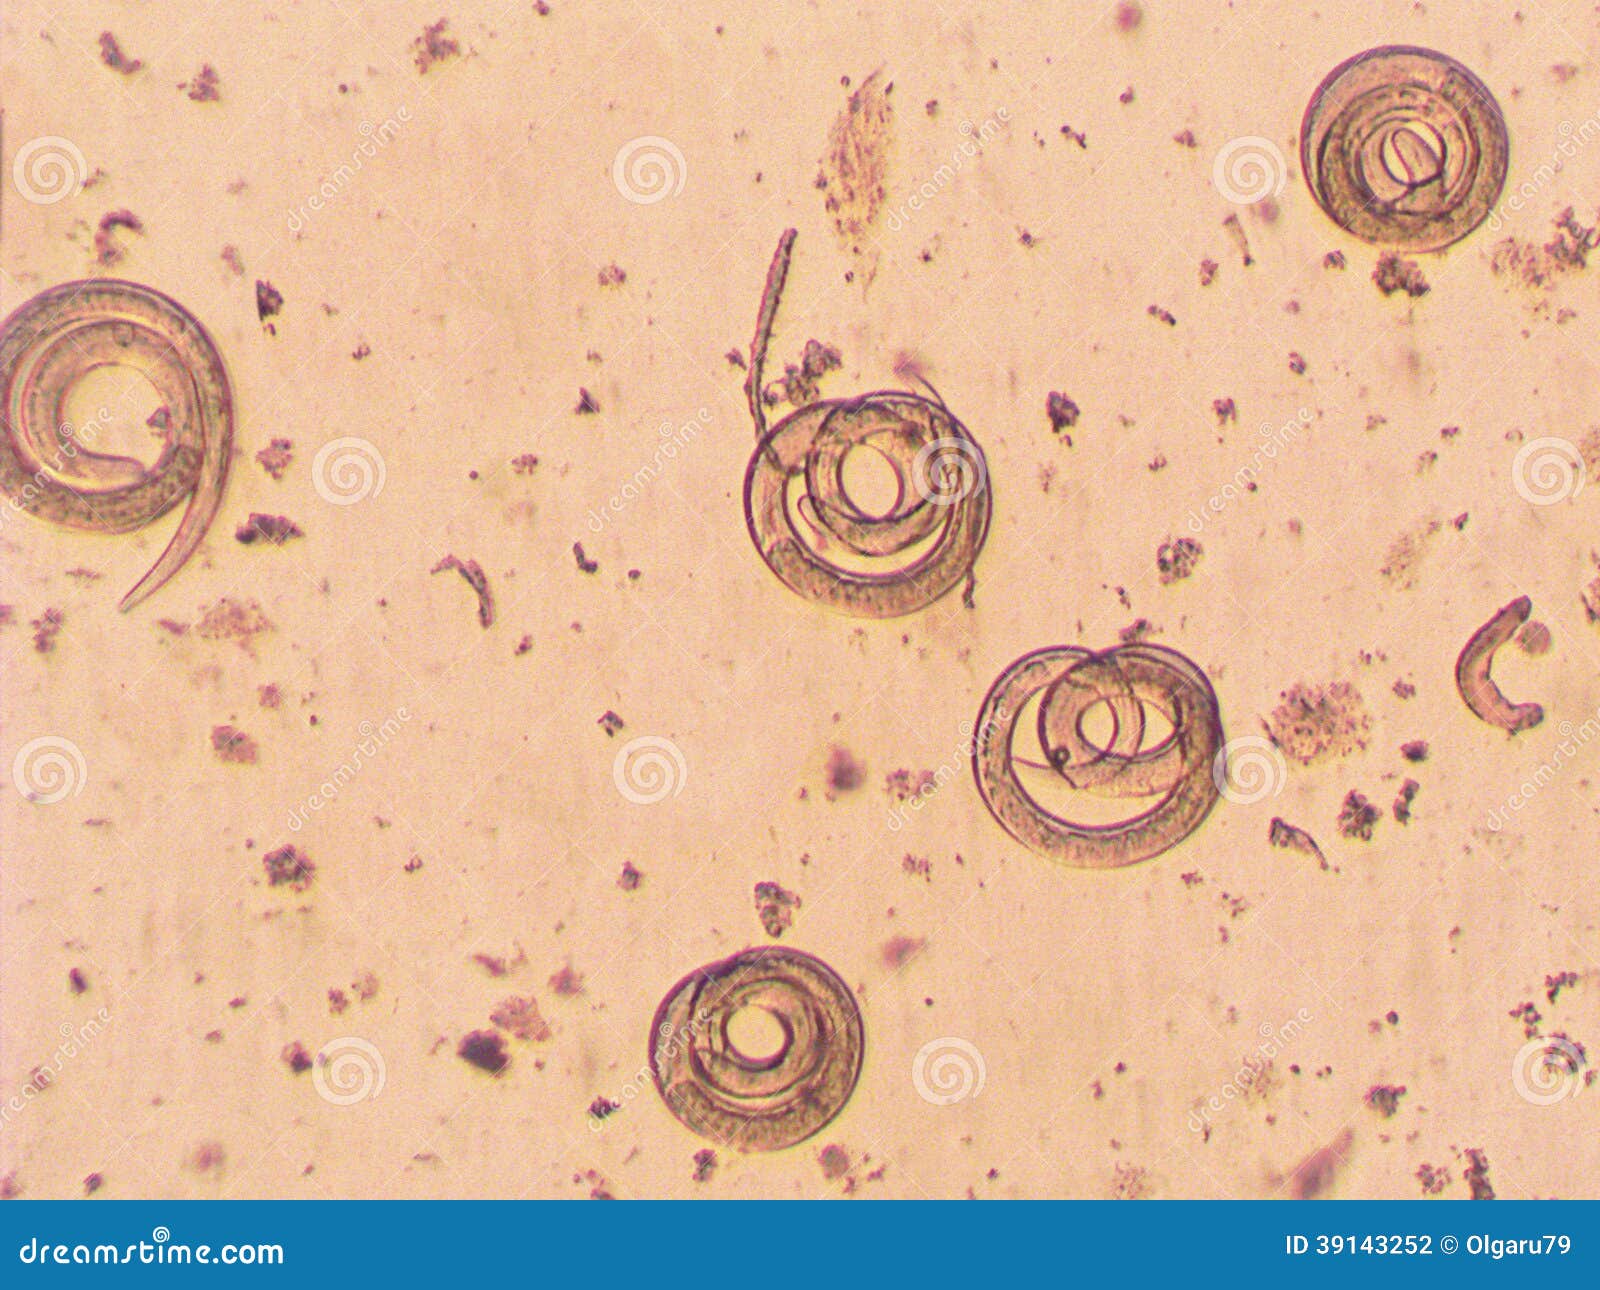 trichinella spiralis - parasitic worm microscope